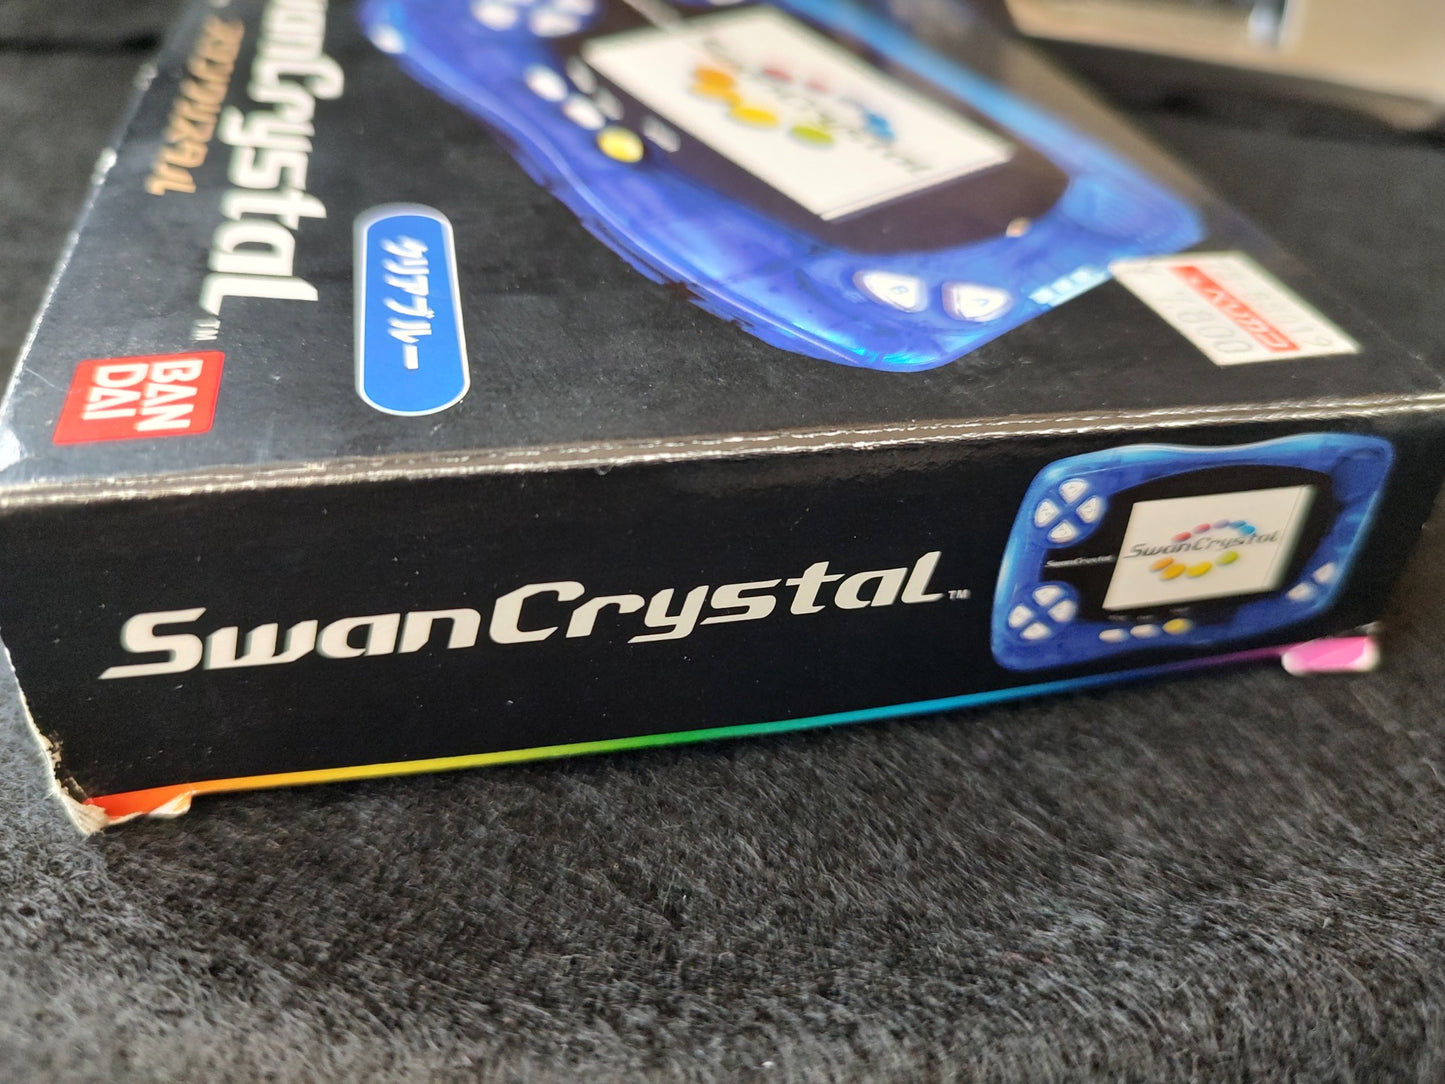 Bandai Wonder Swan Crystal Clear Blue BANDAI Console,Manual,Boexed set-d0929-